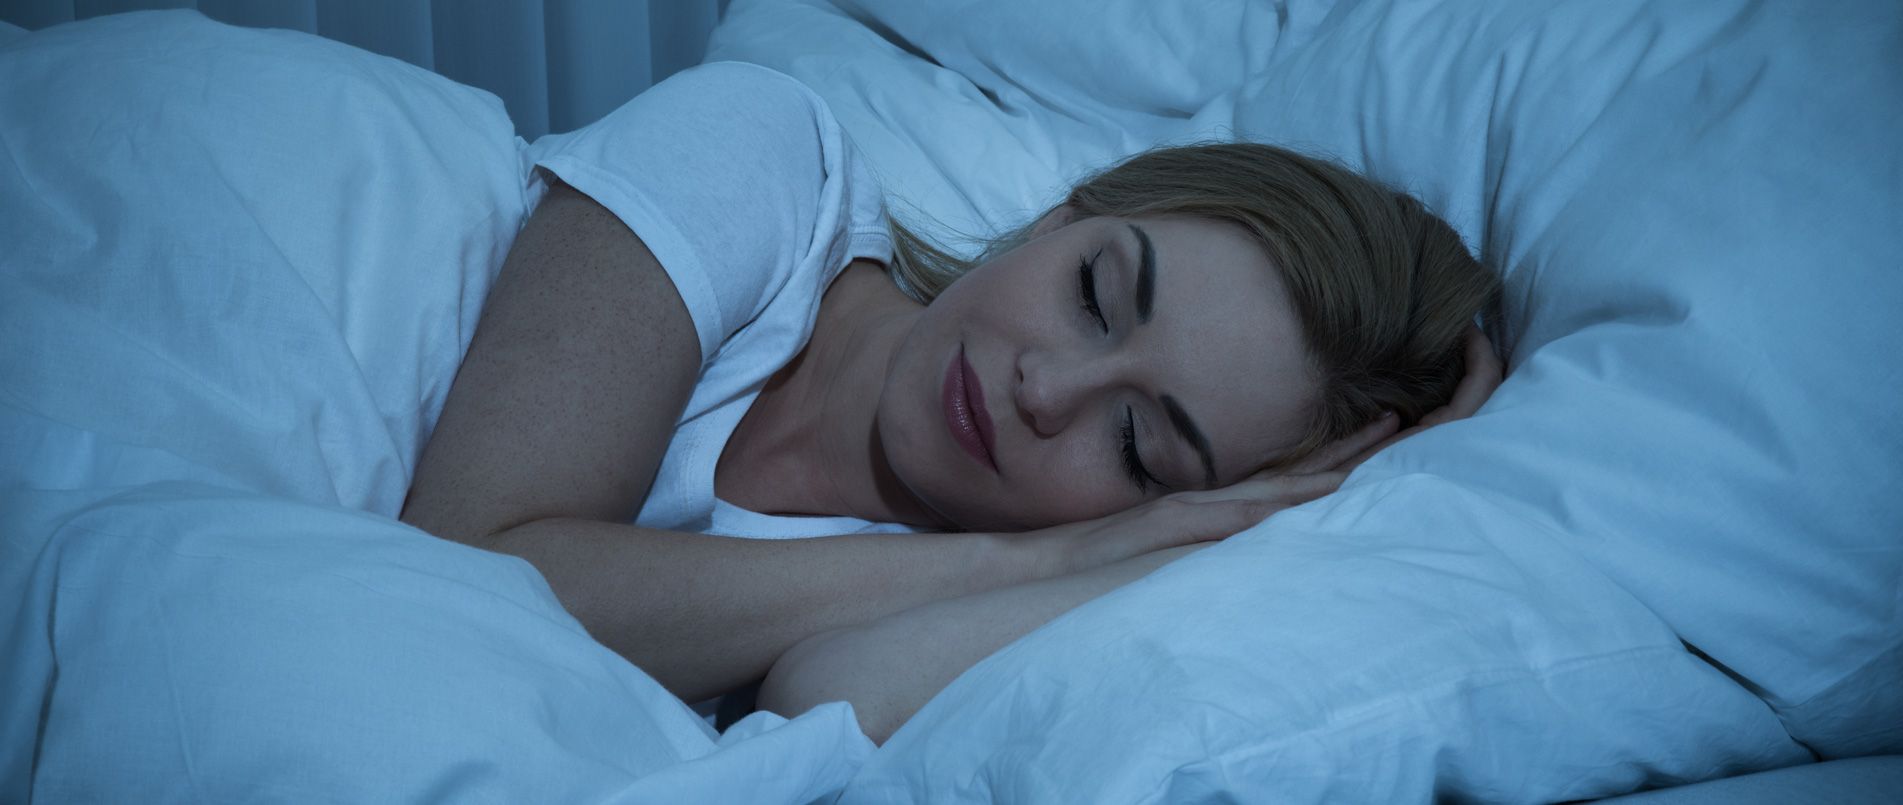 woman sleeping peacefully after sleep disorder treatment